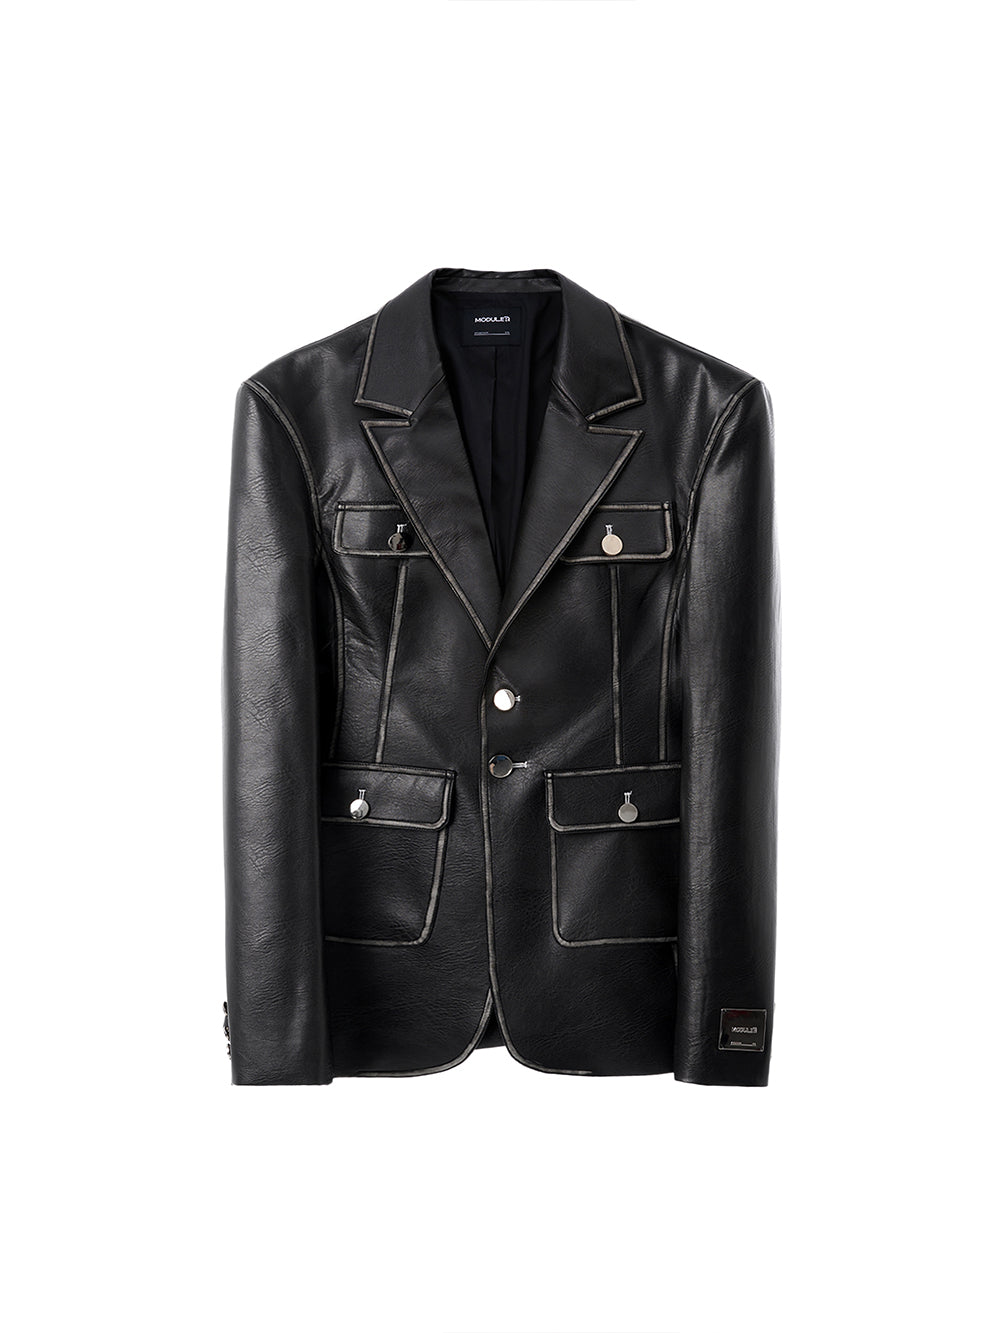 MUKTANK x MODULER Hand-colored Waist Leather Suit